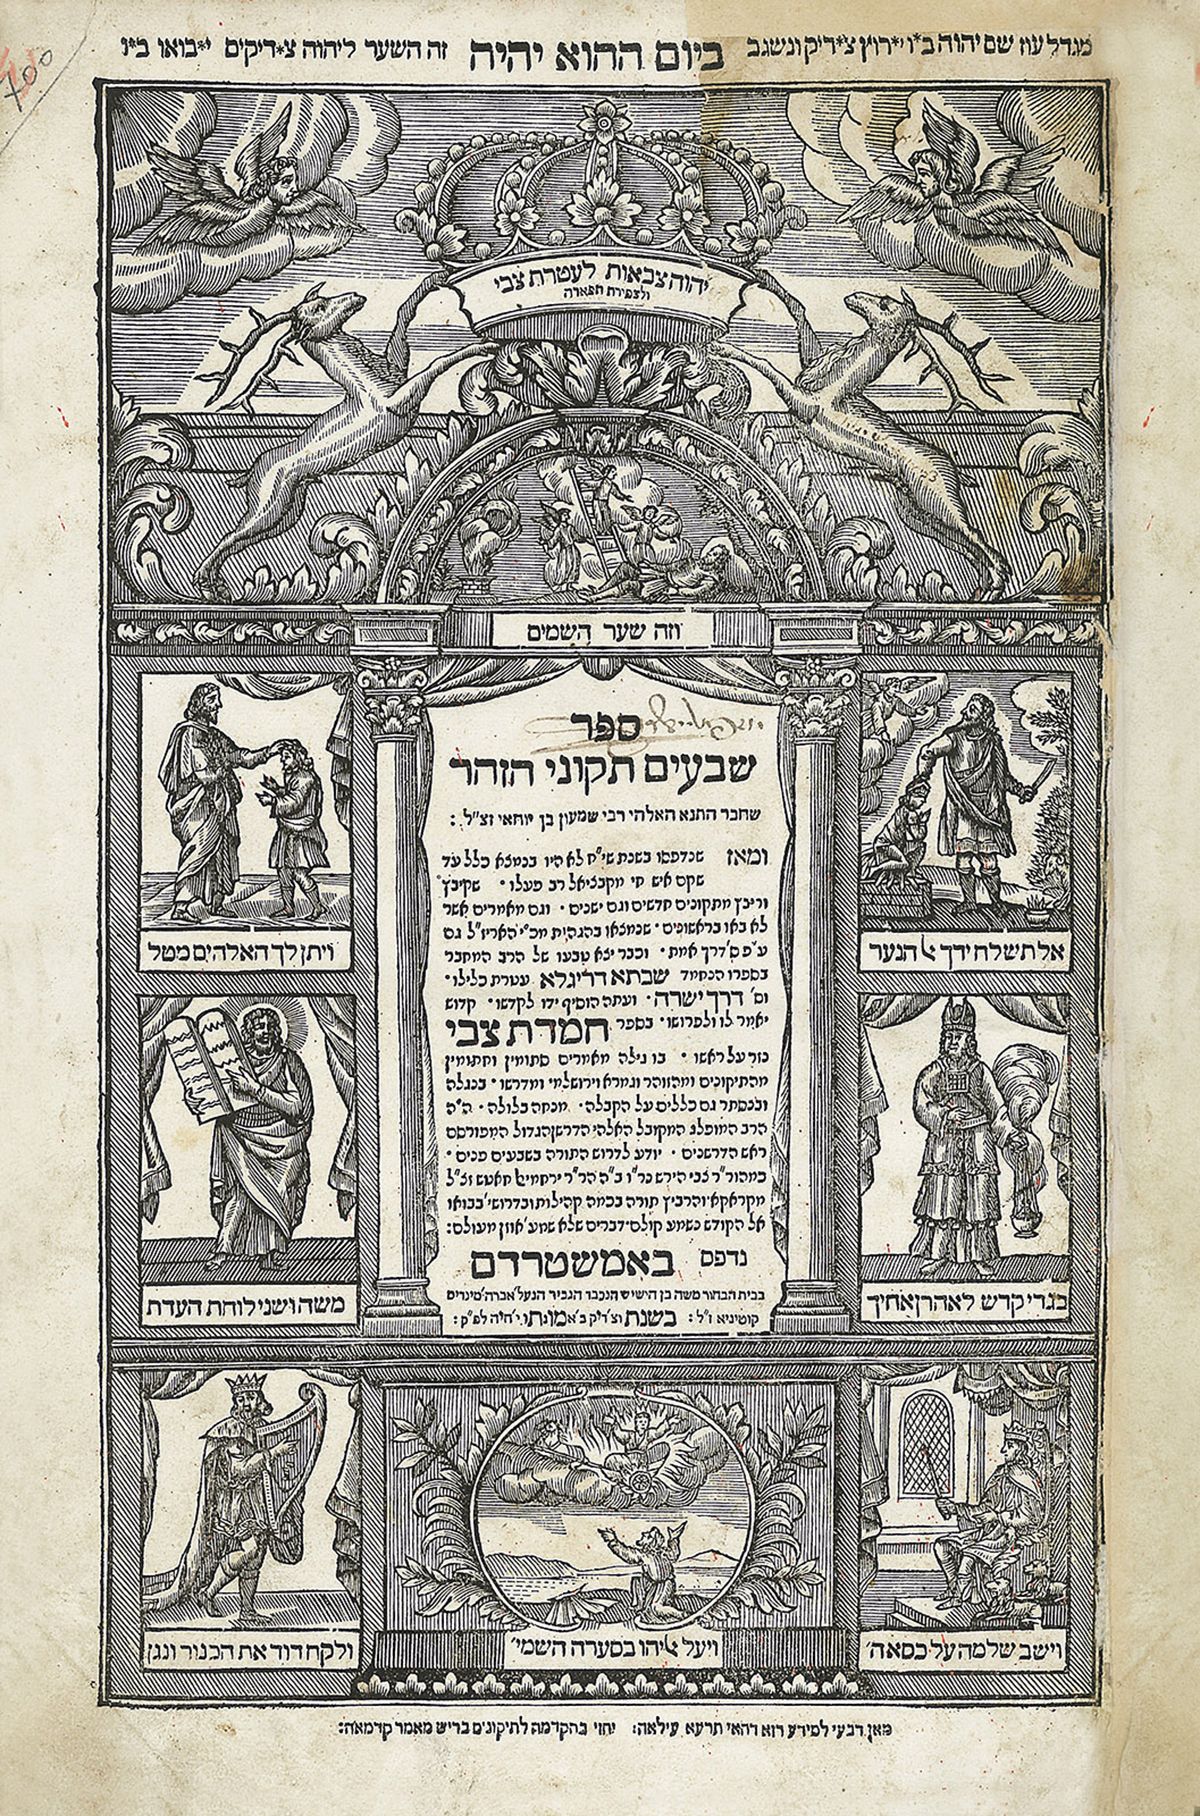 (Traditionally attributed to.) Sepher Shivim Tikunei Hazohar. With commentary “Chemdath Tzvi” by Tzvi Hirsch ben Jerachmiel Chotsch of Cracow.